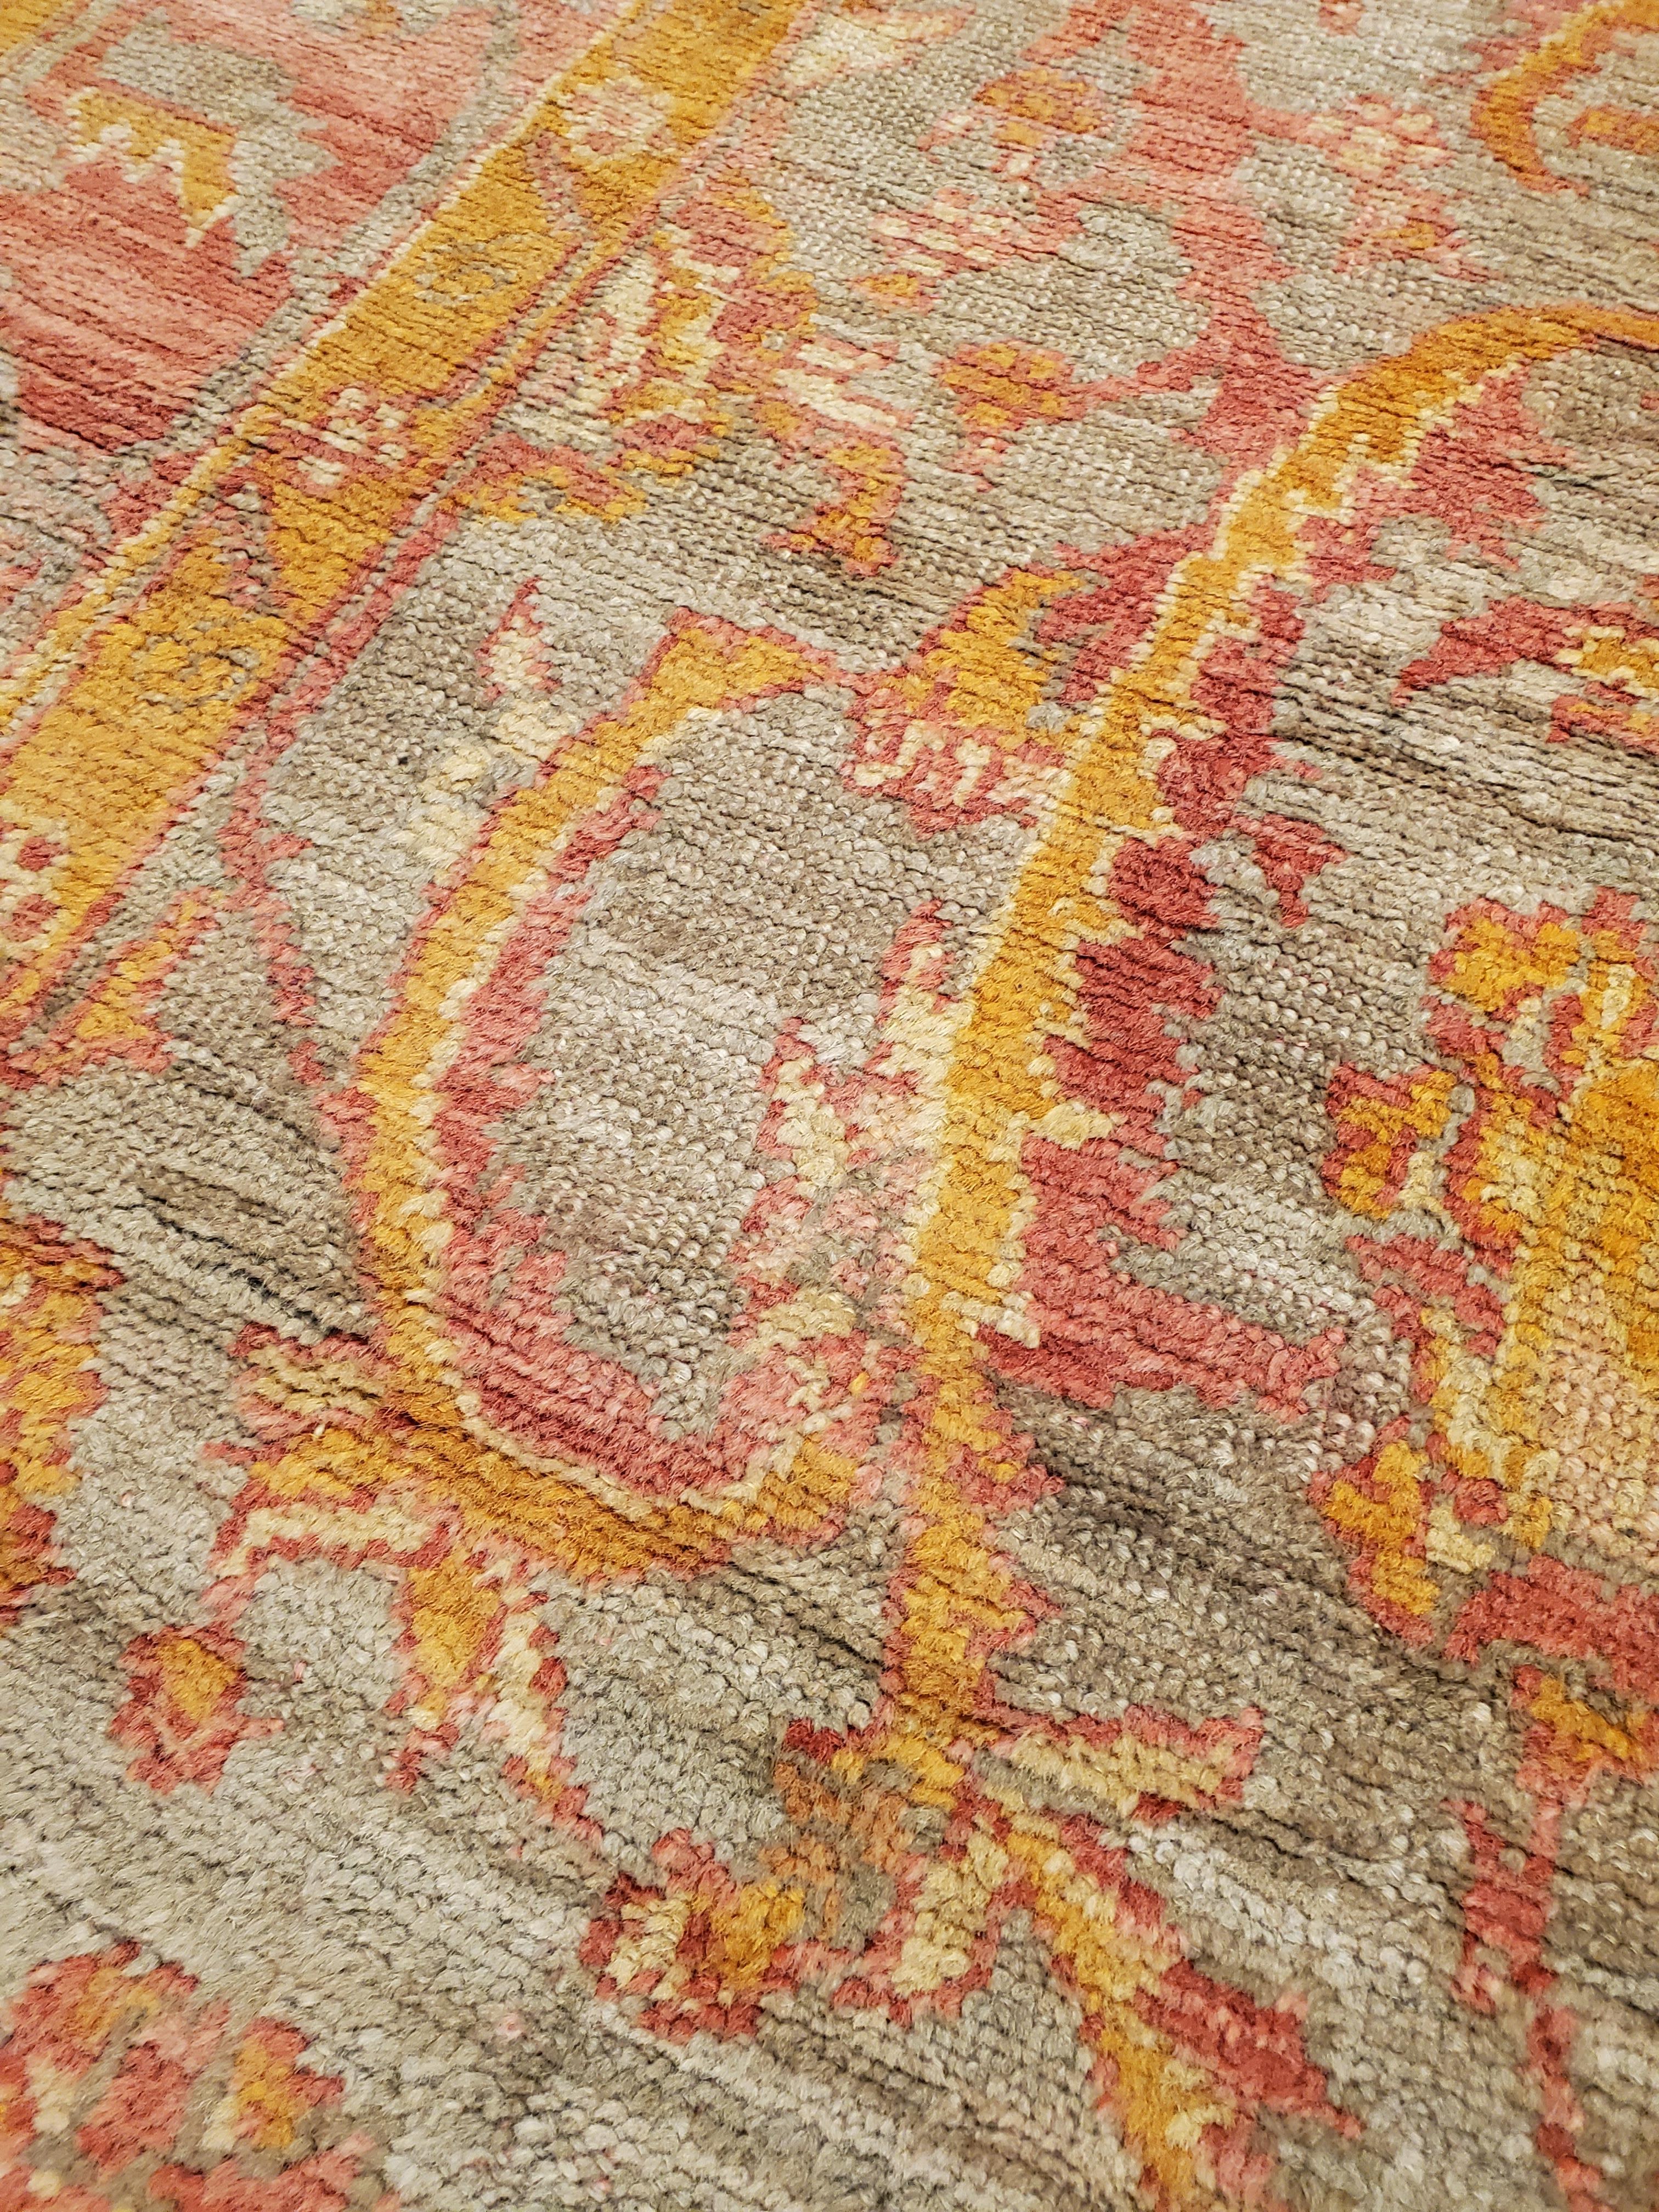 Antique Oushak Carpet, Handmade Turkish Oriental Rug, Saffron, Coral, Light Blue For Sale 3